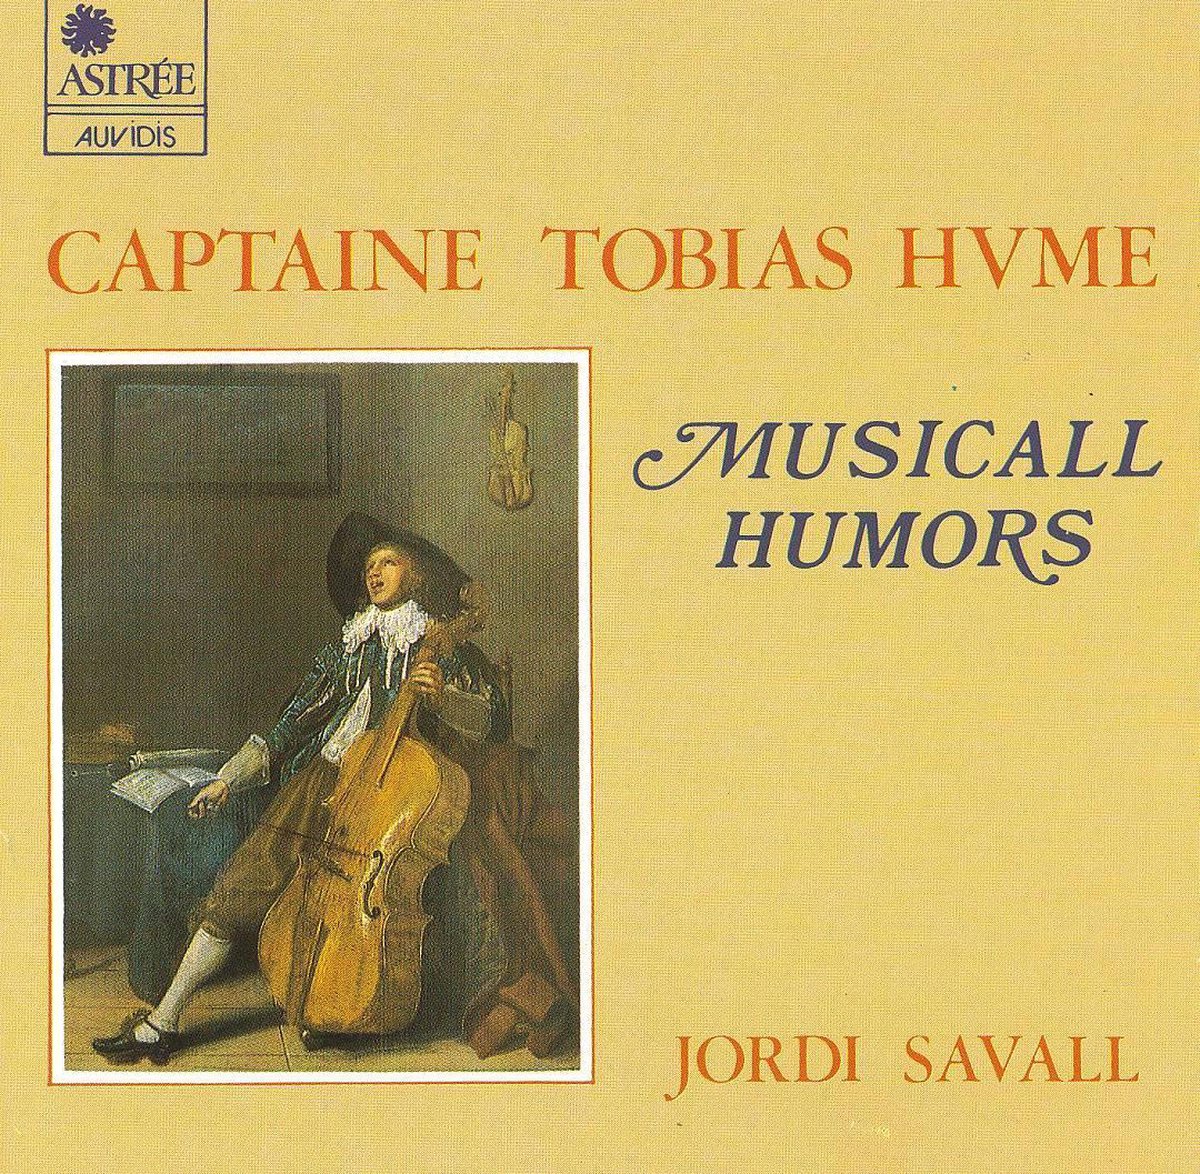 Captaine Tobias Hume: Musicall Humors - Jordi Savall